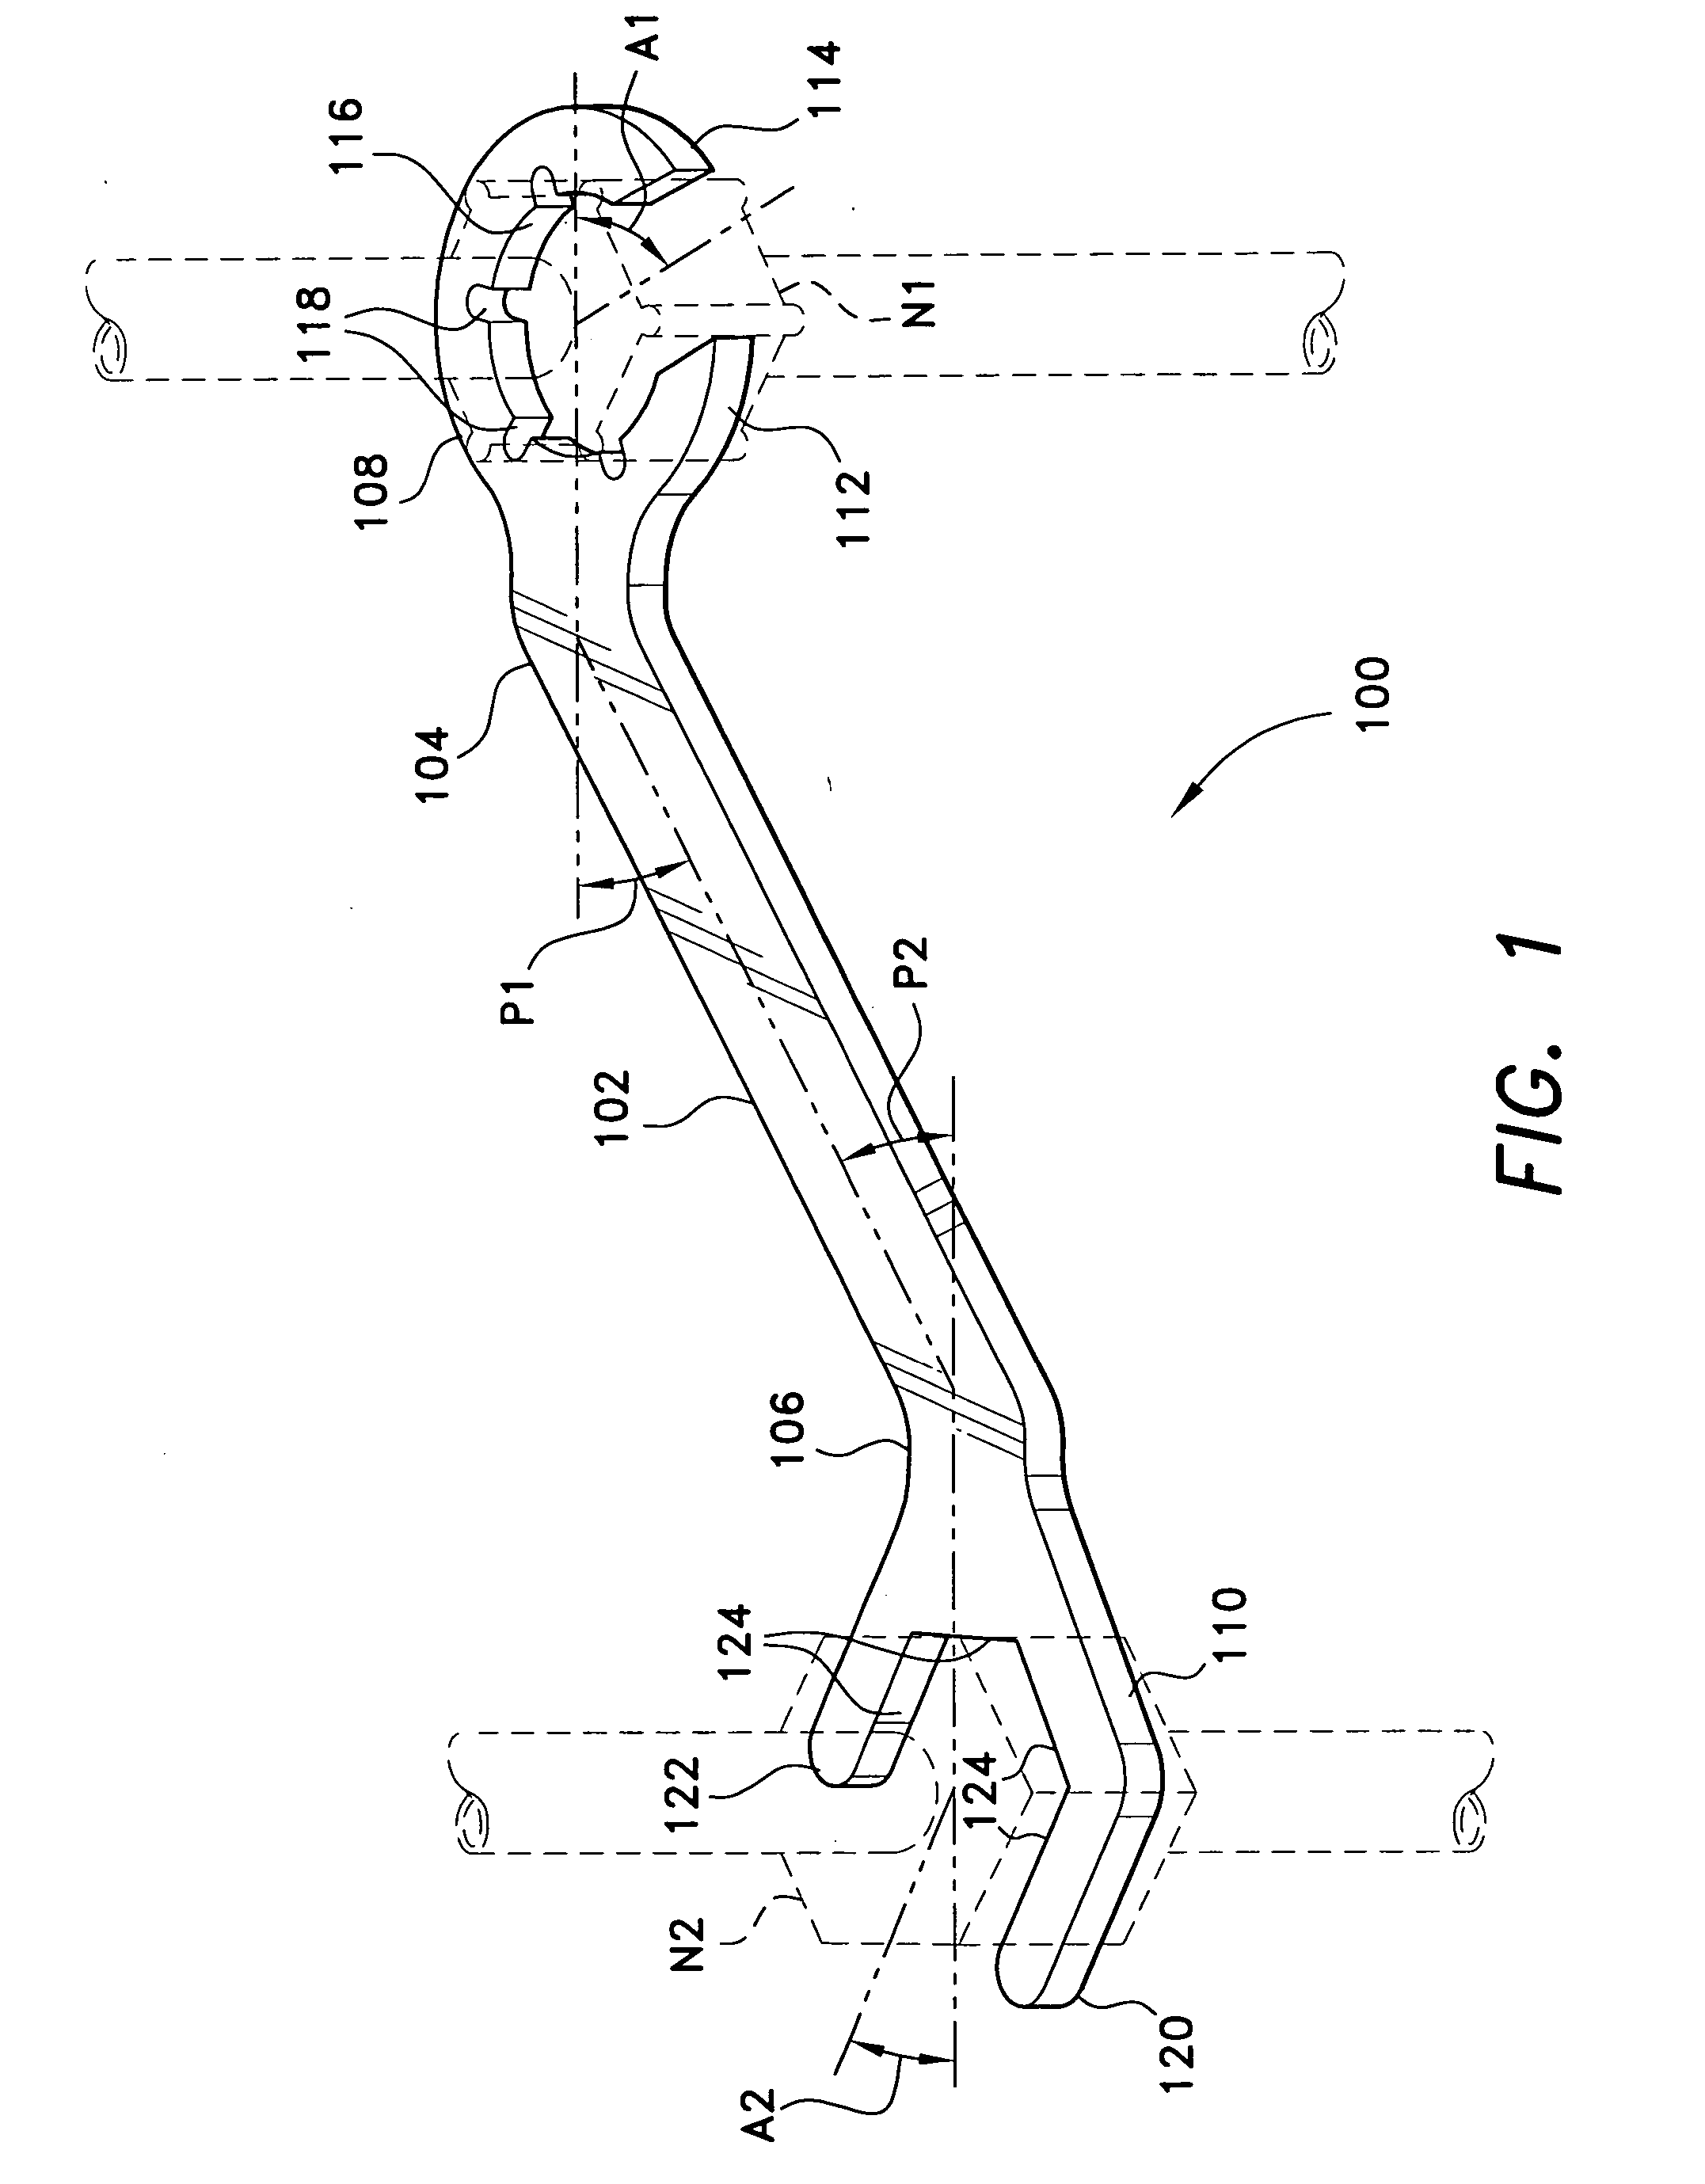 Toilet ballcock valve wrench